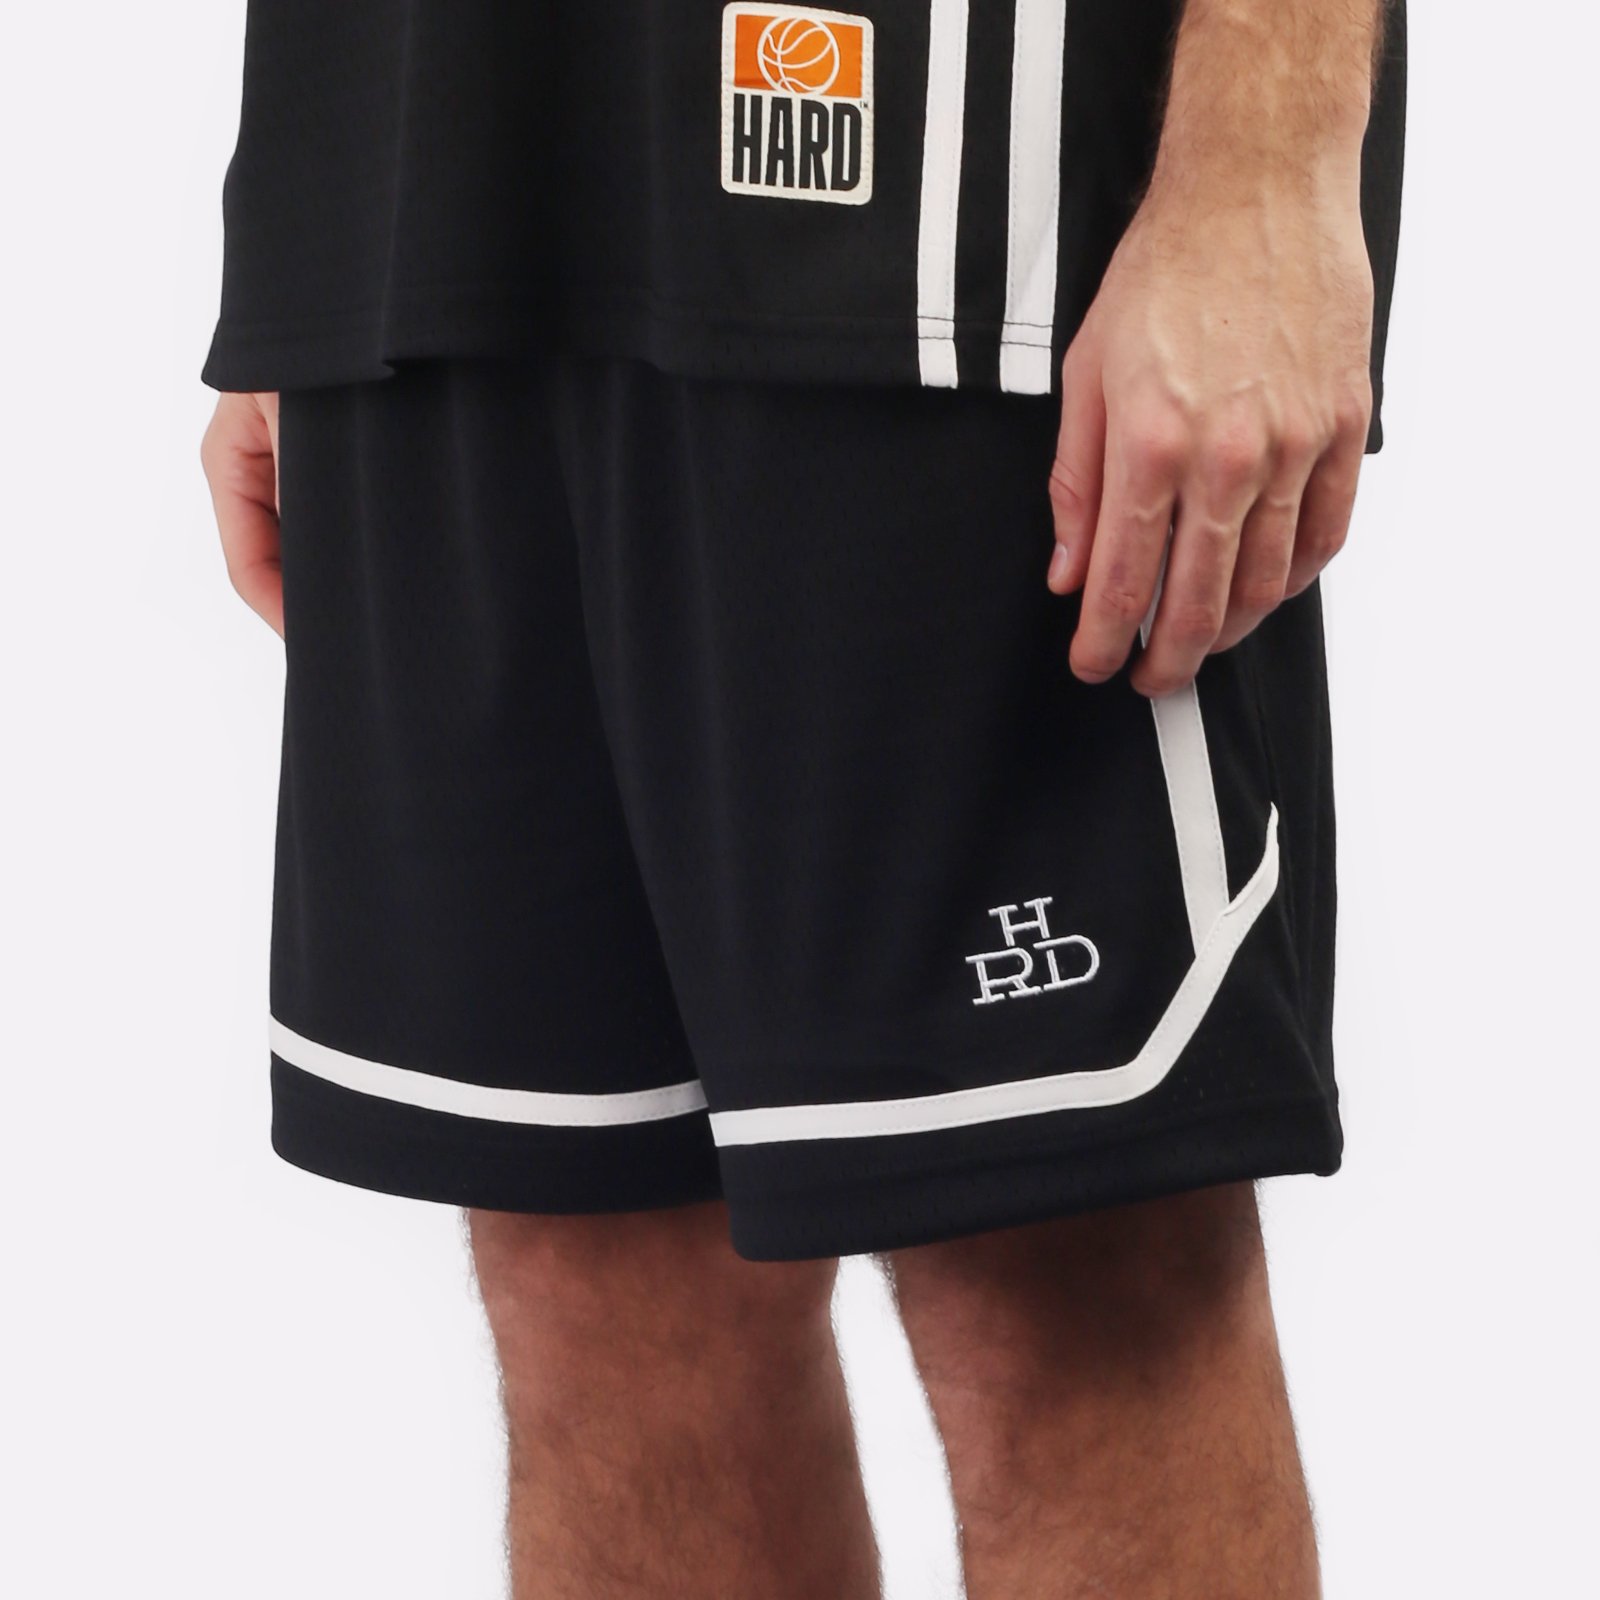 мужские шорты Hard Teammate  (Teammate short-blk/wht)  - цена, описание, фото 4